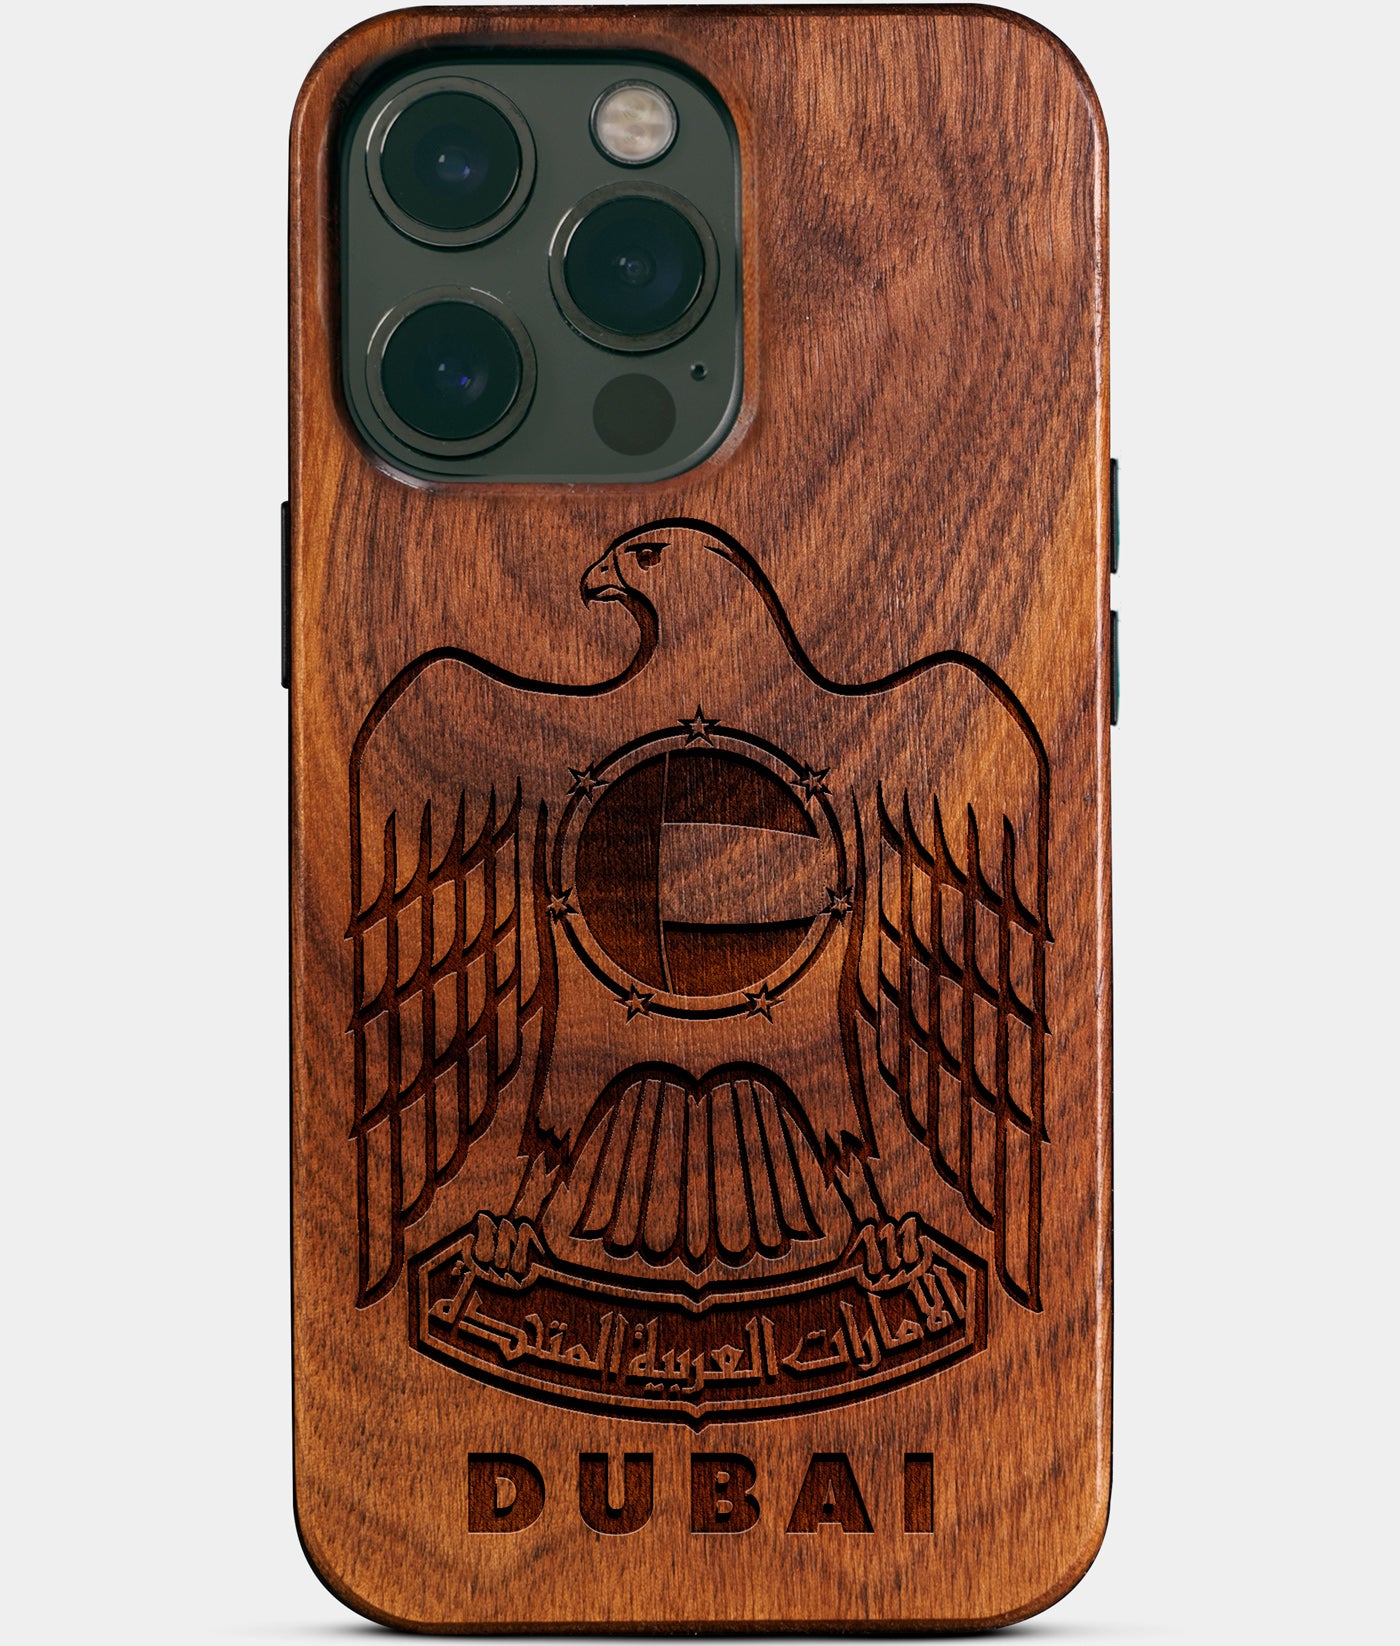 Custom United Arab Emirates Dubai iPhone Case - Carved Wood Personalized UAE Dubai iPhone Covers